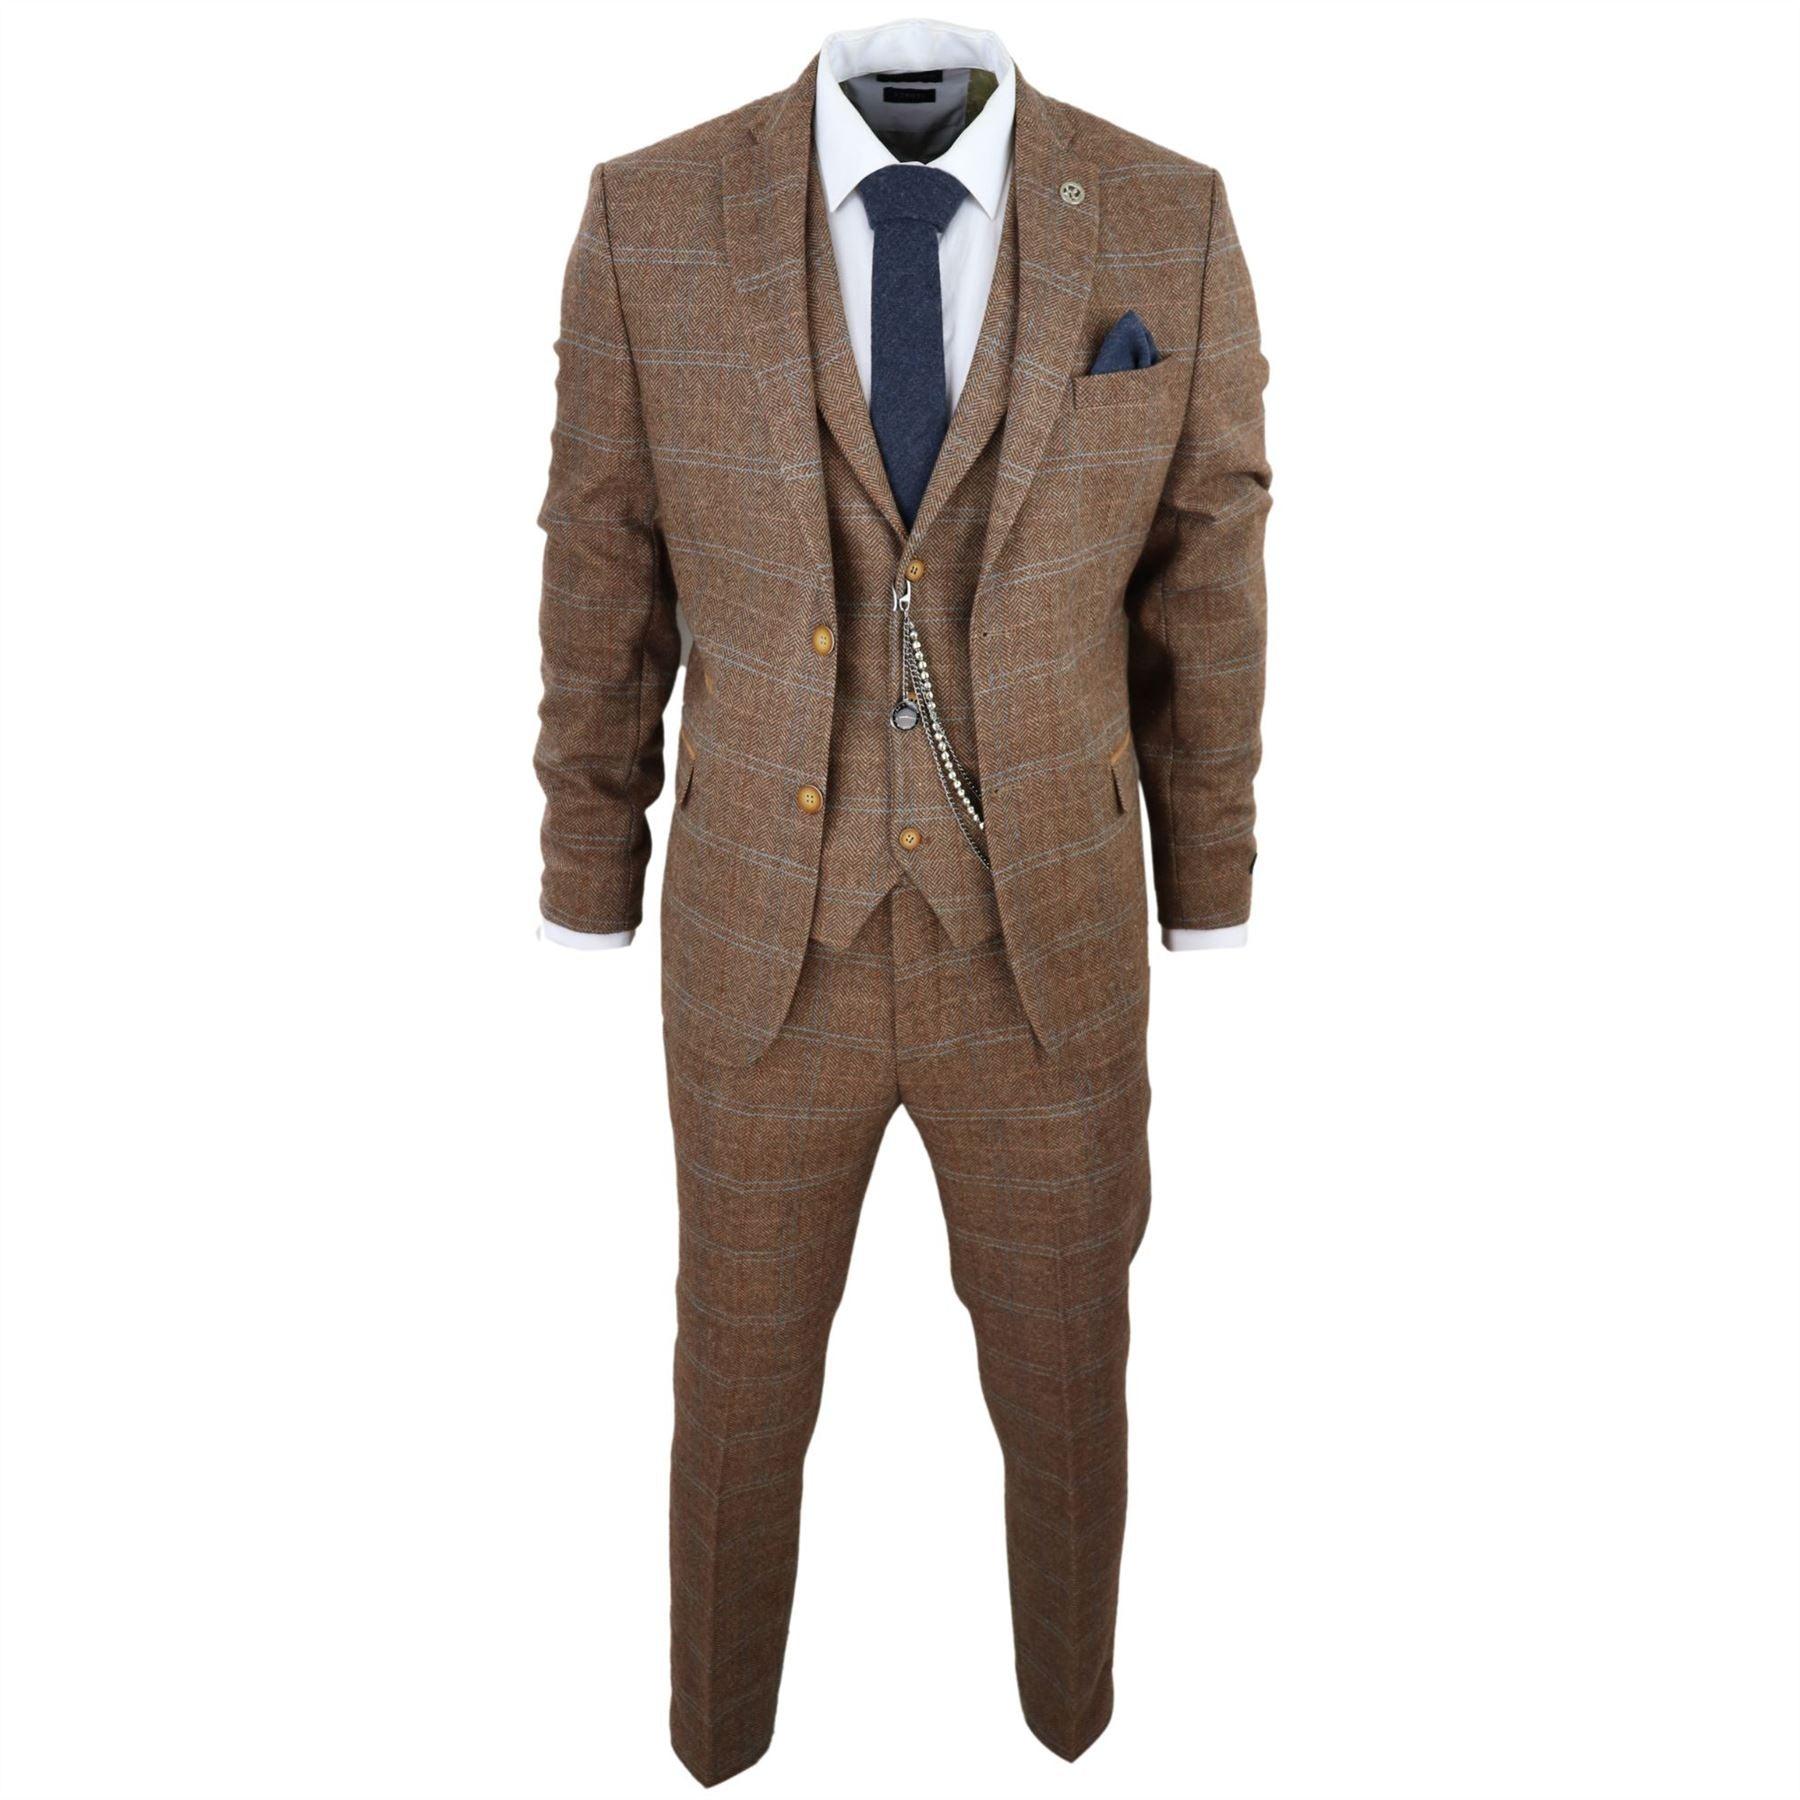 Men's 3 Piece Suit Wool Tweed Herringbone Tan Brown Blue Check 1920s Gatsby Formal Dress Suits - Knighthood Store